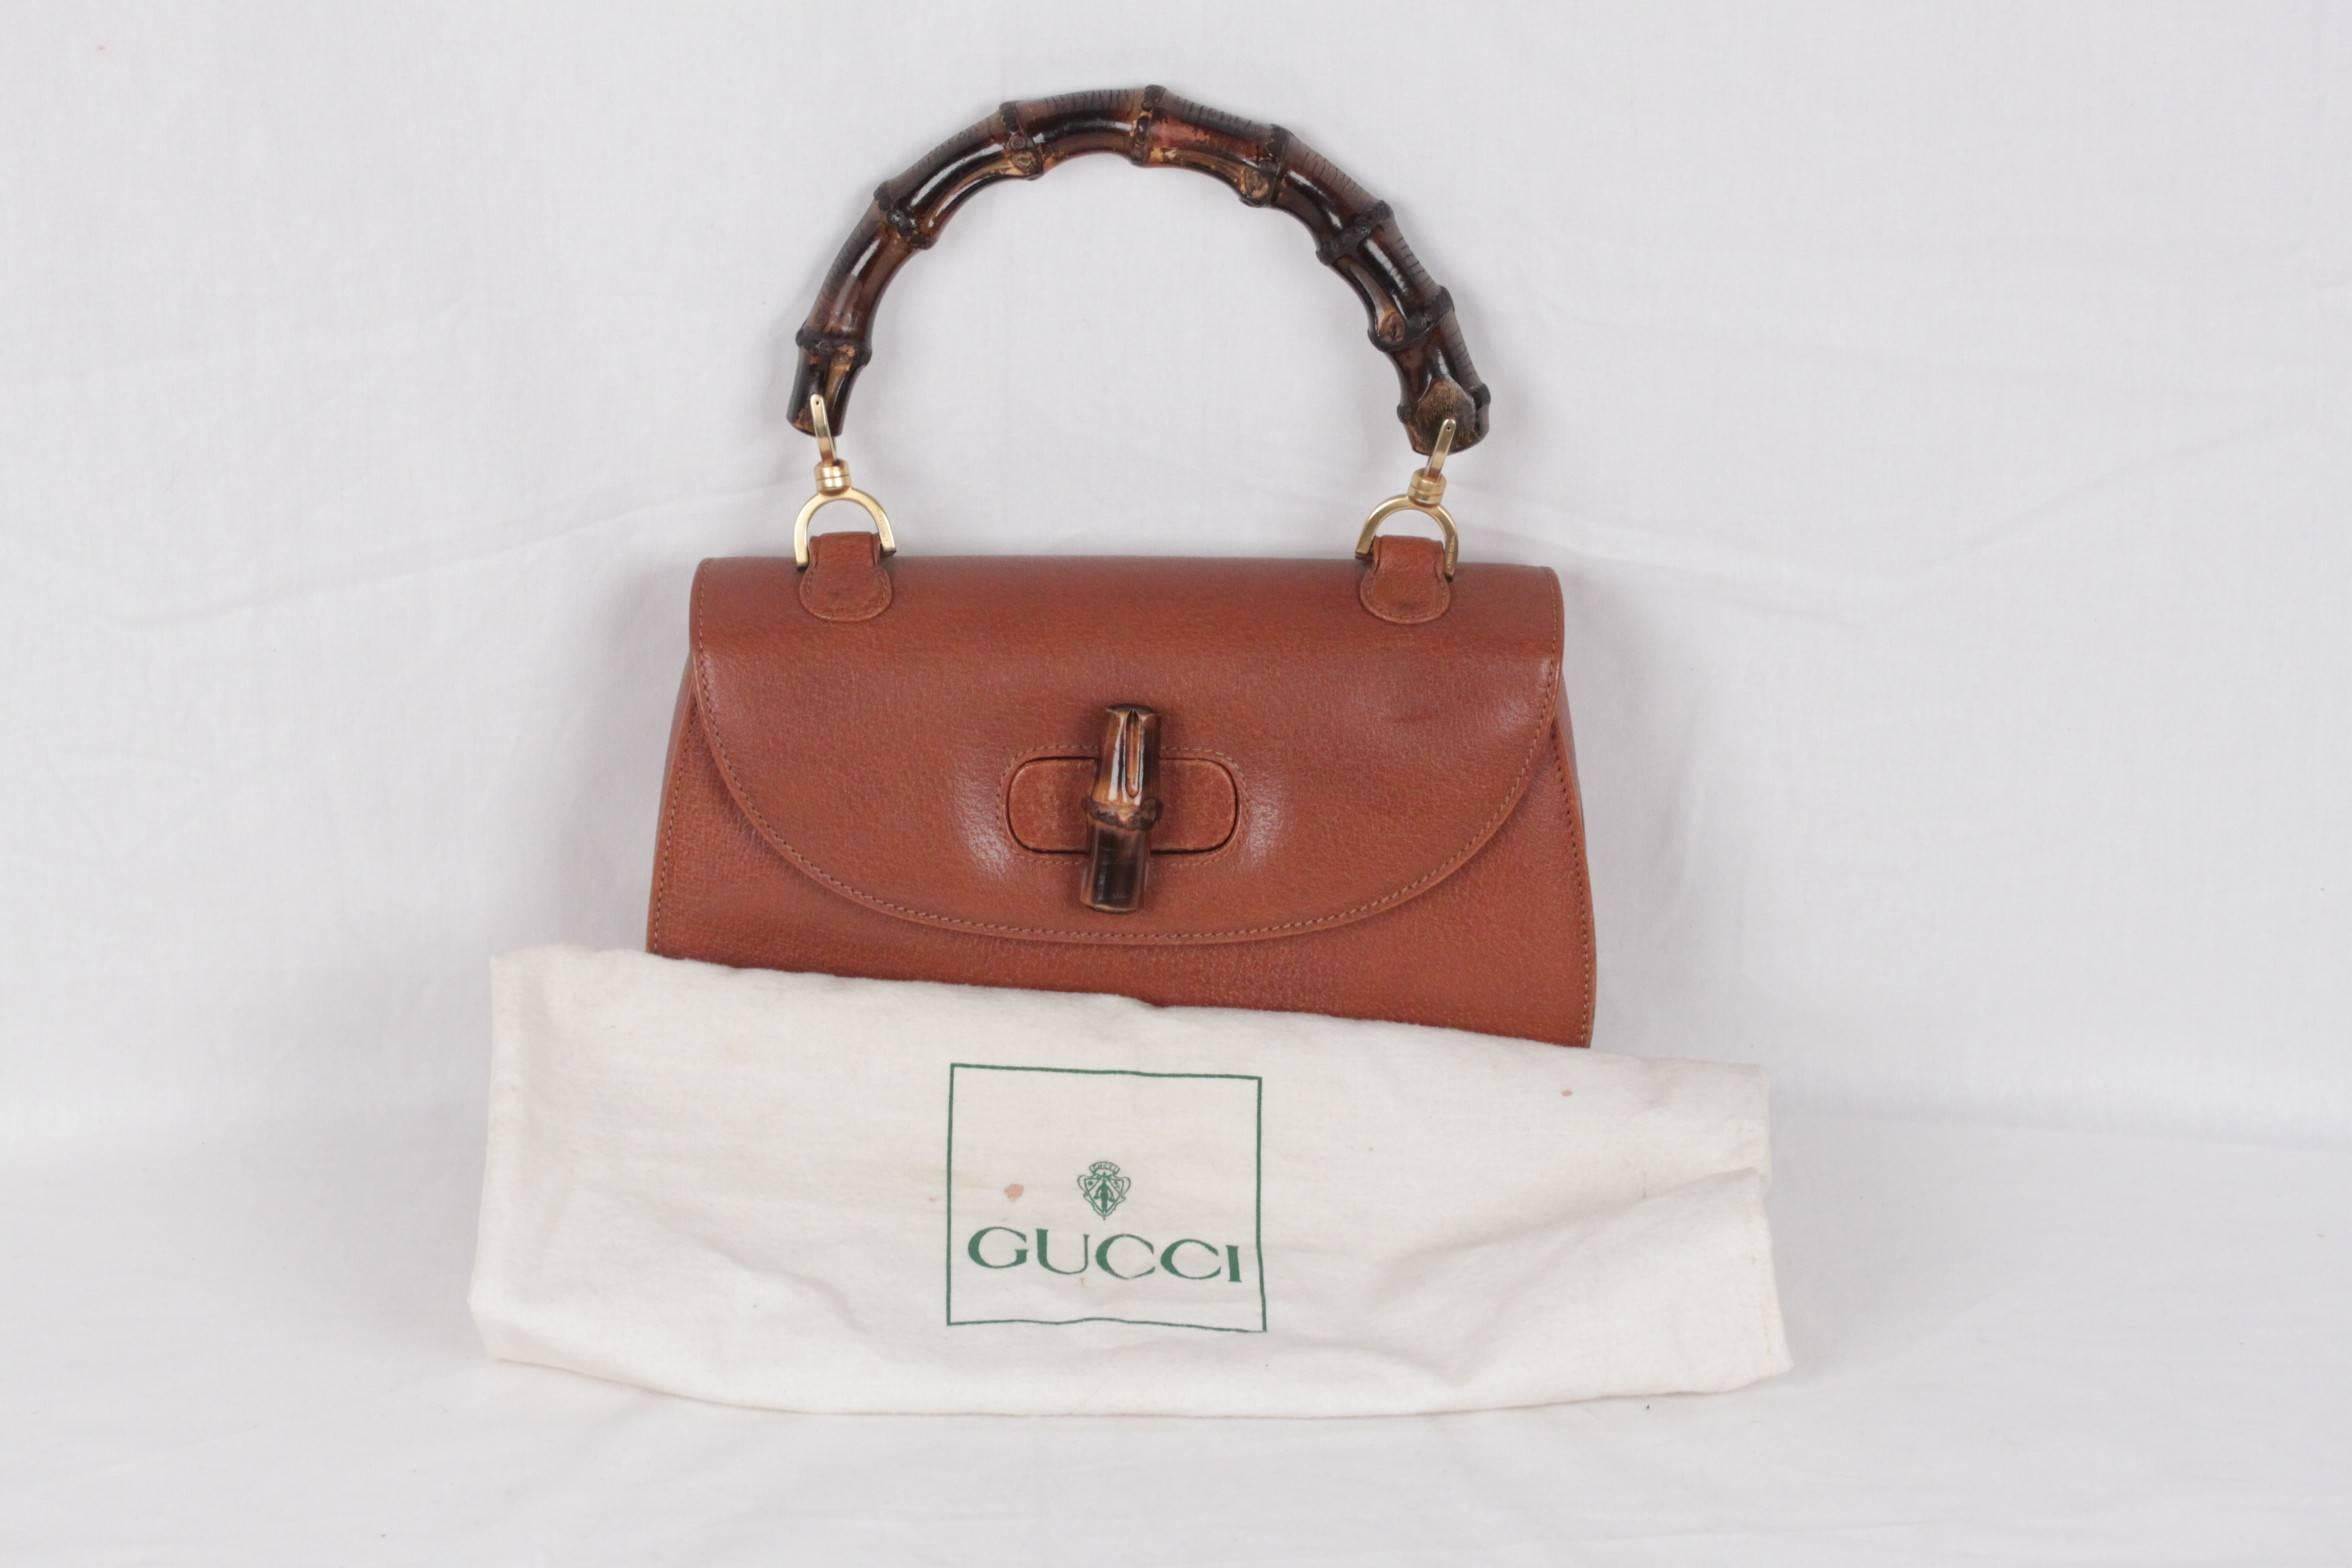 Women's GUCCI Tan Leather BAMBOO BAG Top Handle Handbag PURSE